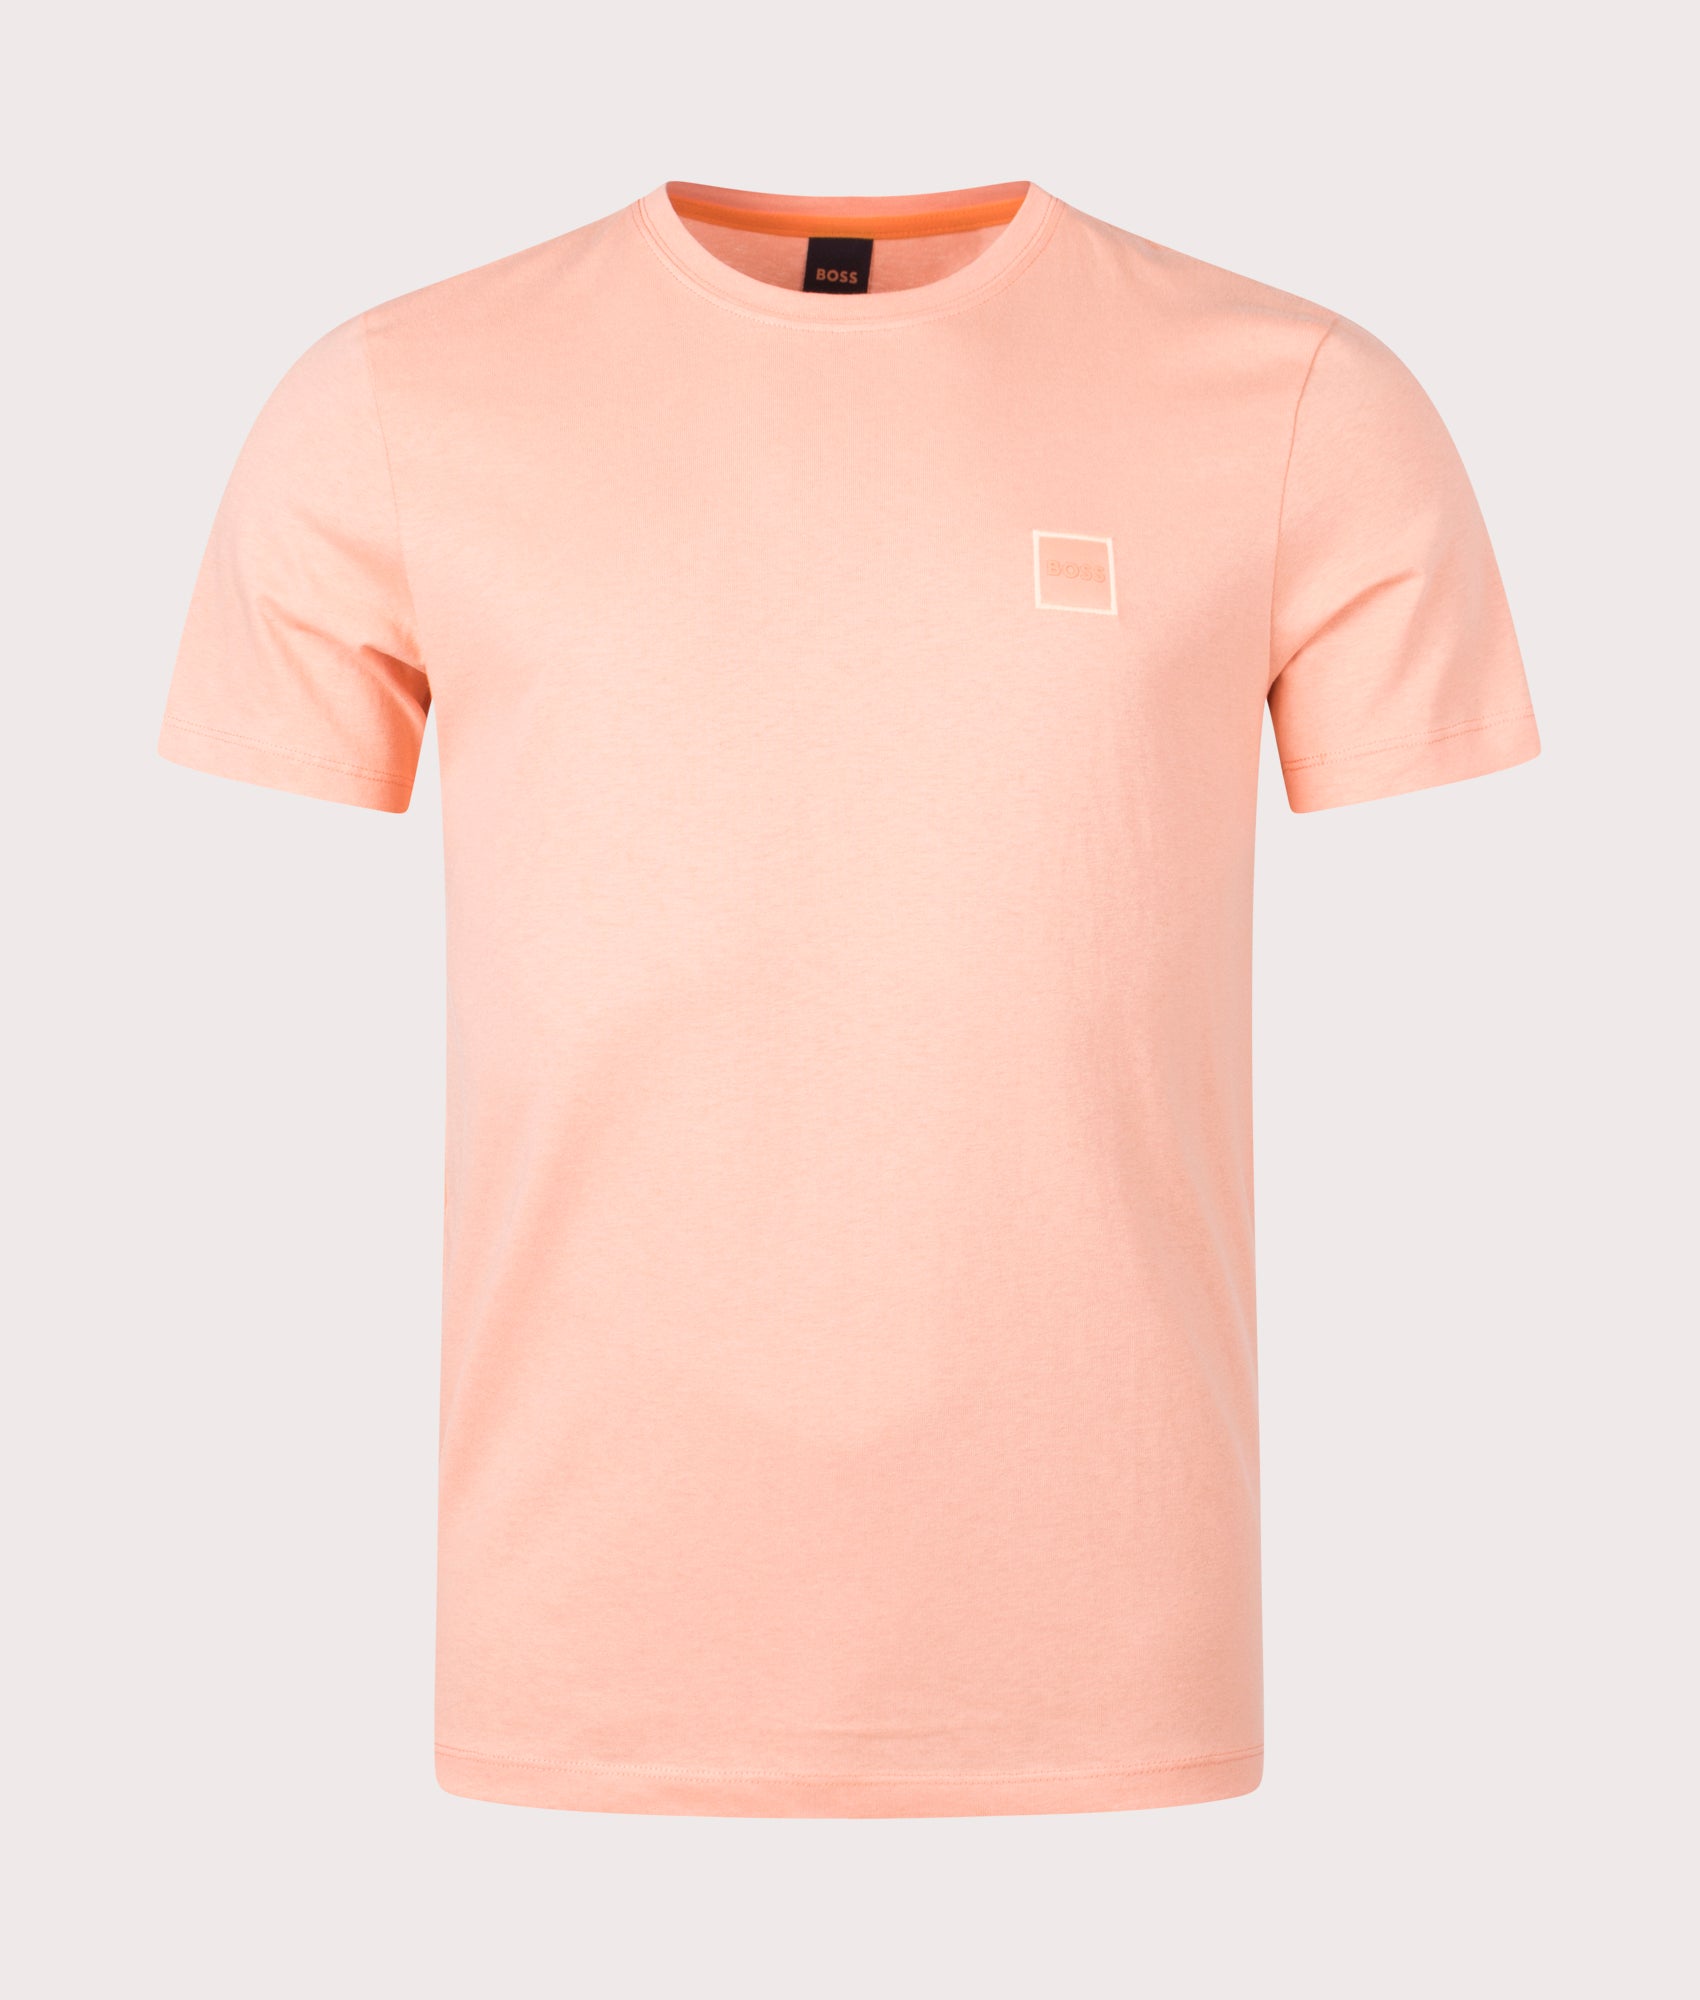 Relaxed Fit Tales T-Shirt Light/Pastel | | Orange BOSS EQVVS